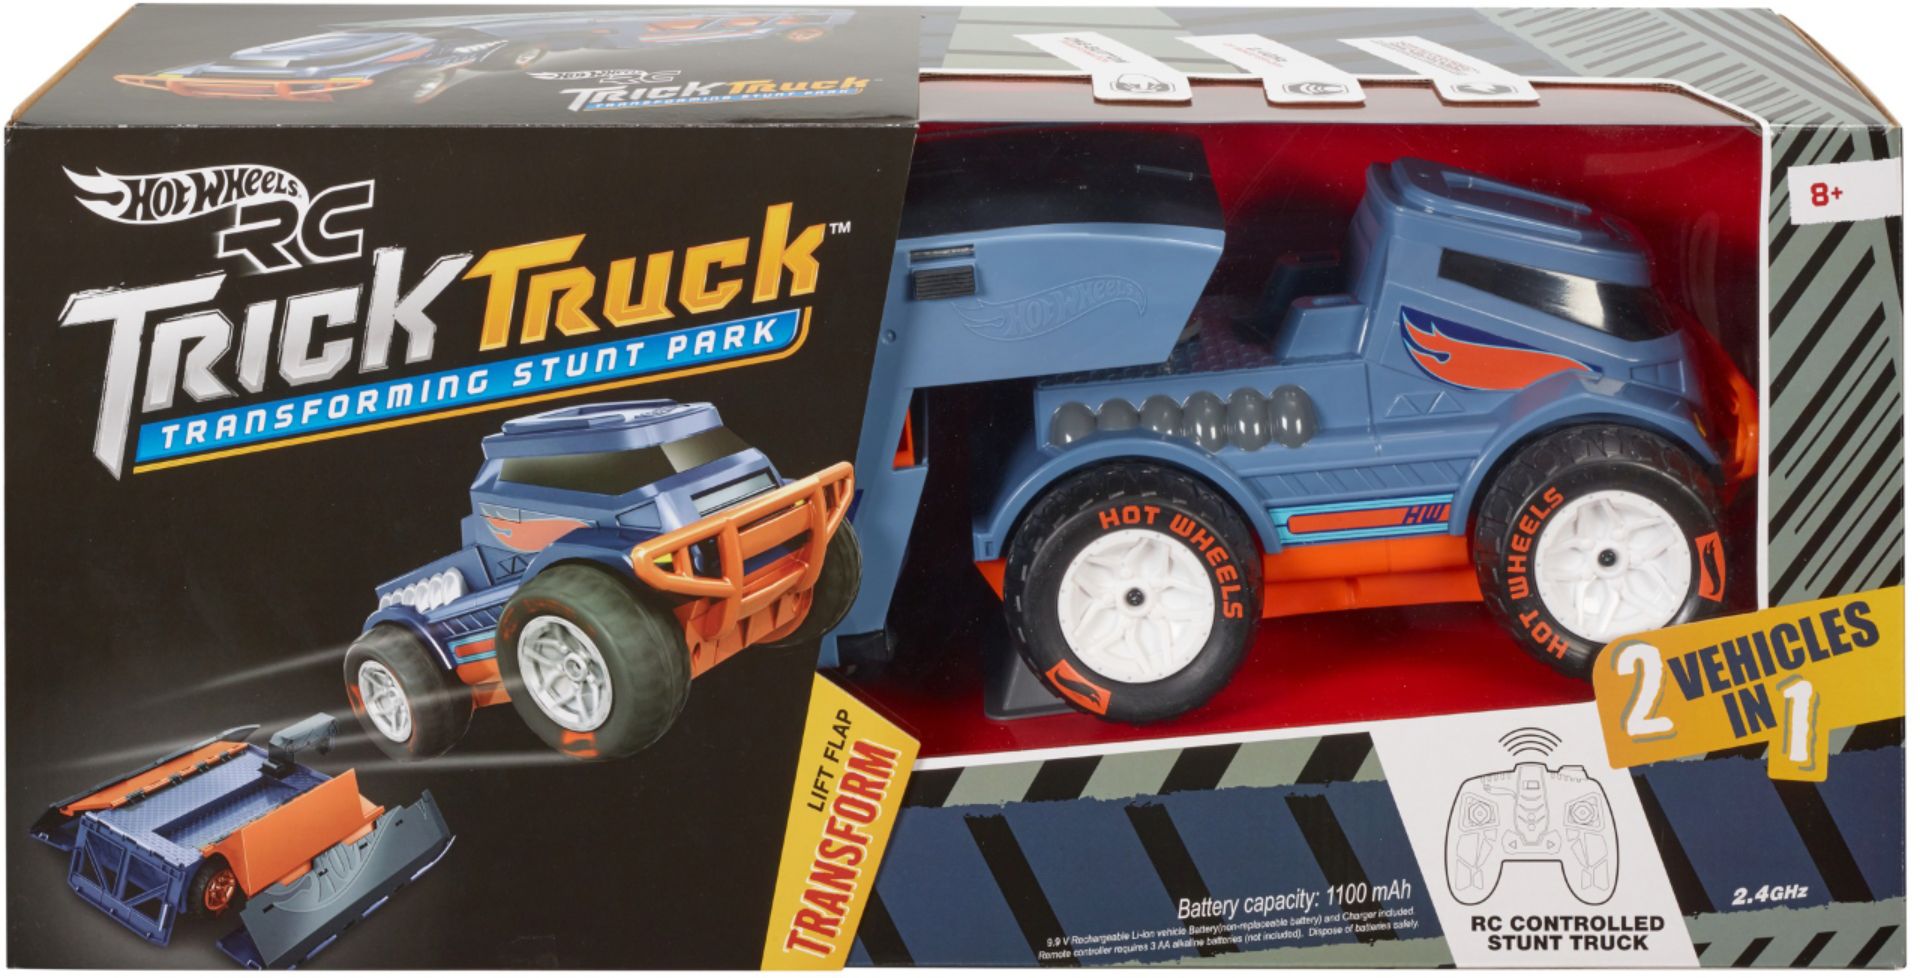 trick trucks toy